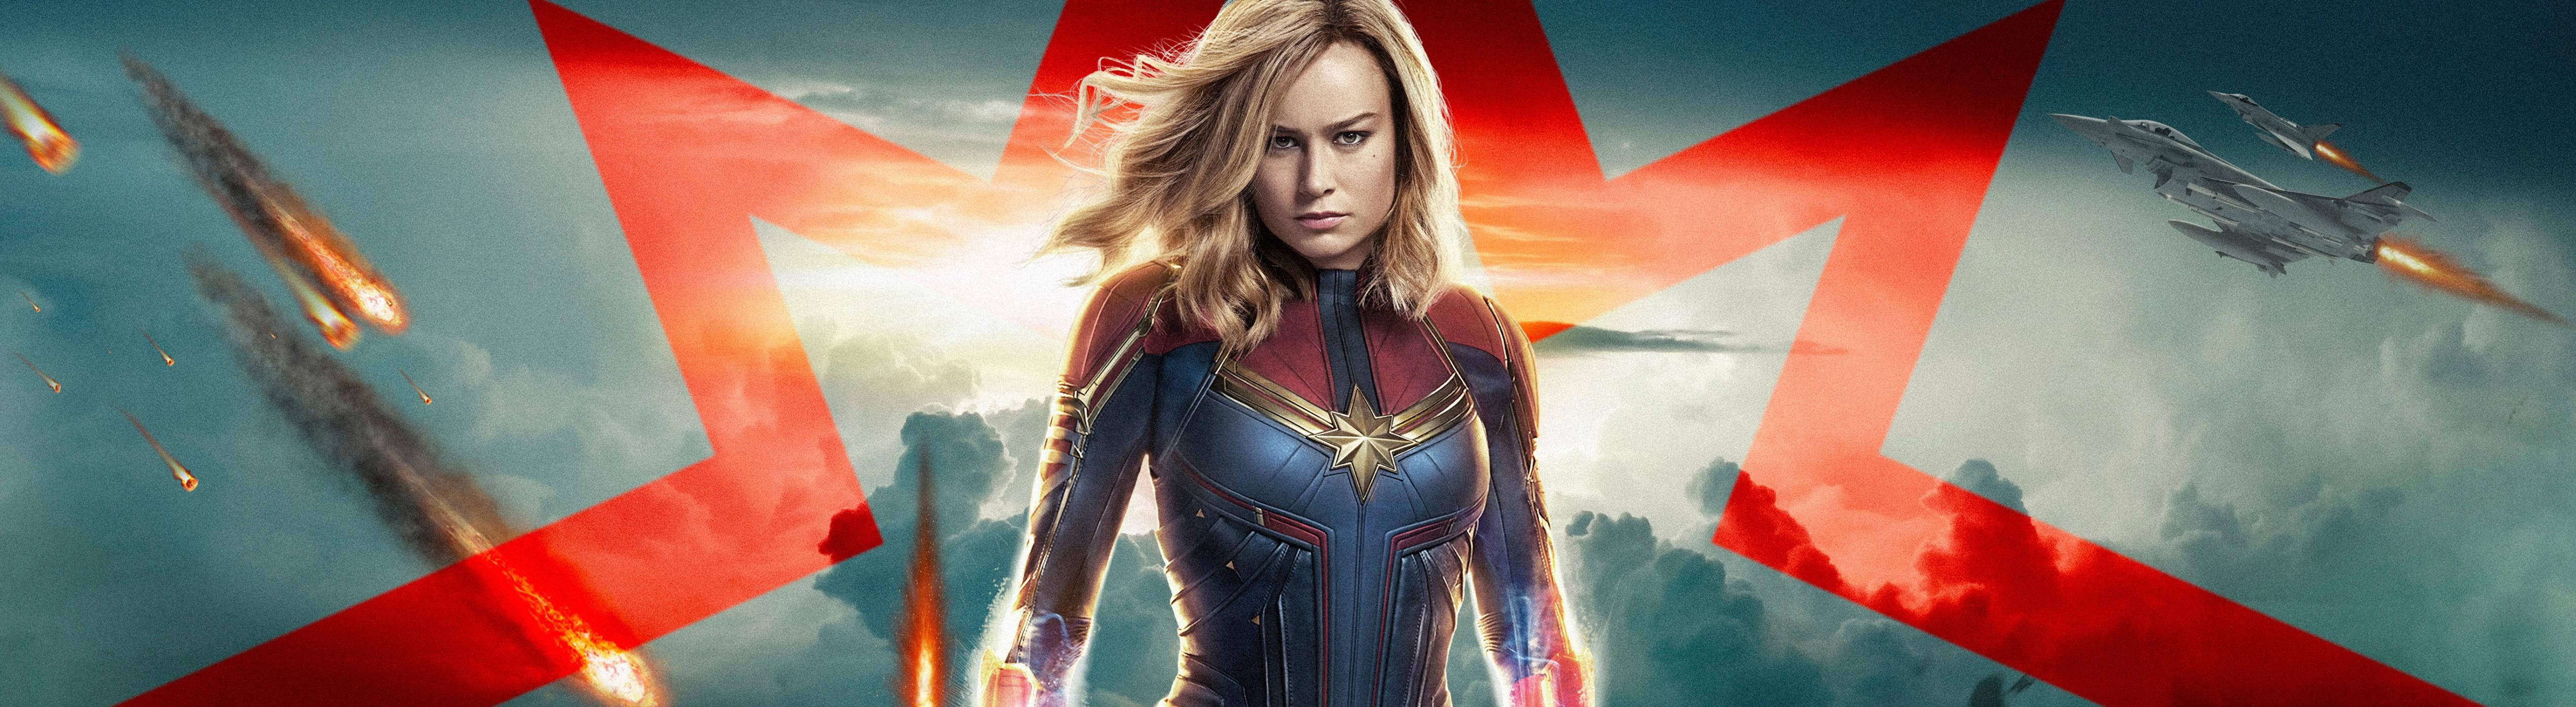 Captain Marvel 5120 X 1440 Background